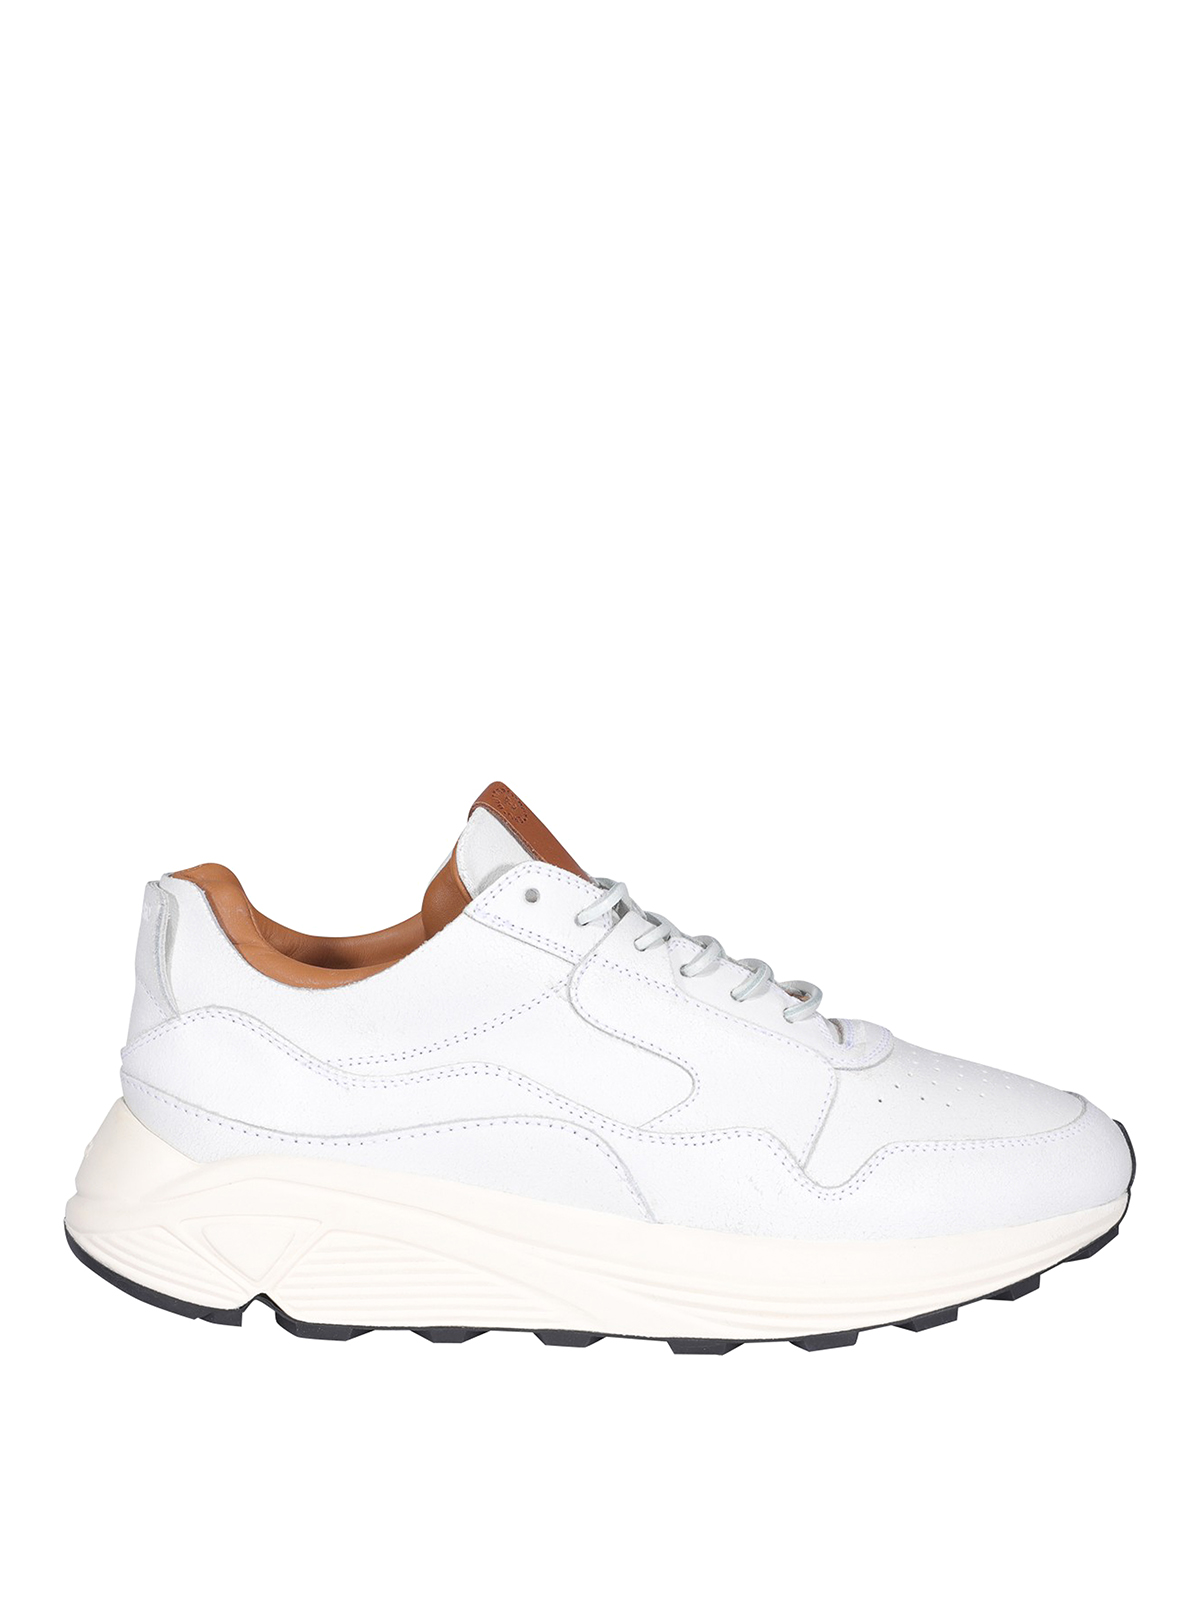 Trainers Buttero - Vinci sneakers - B7350BIAN03 | Shop online at iKRIX